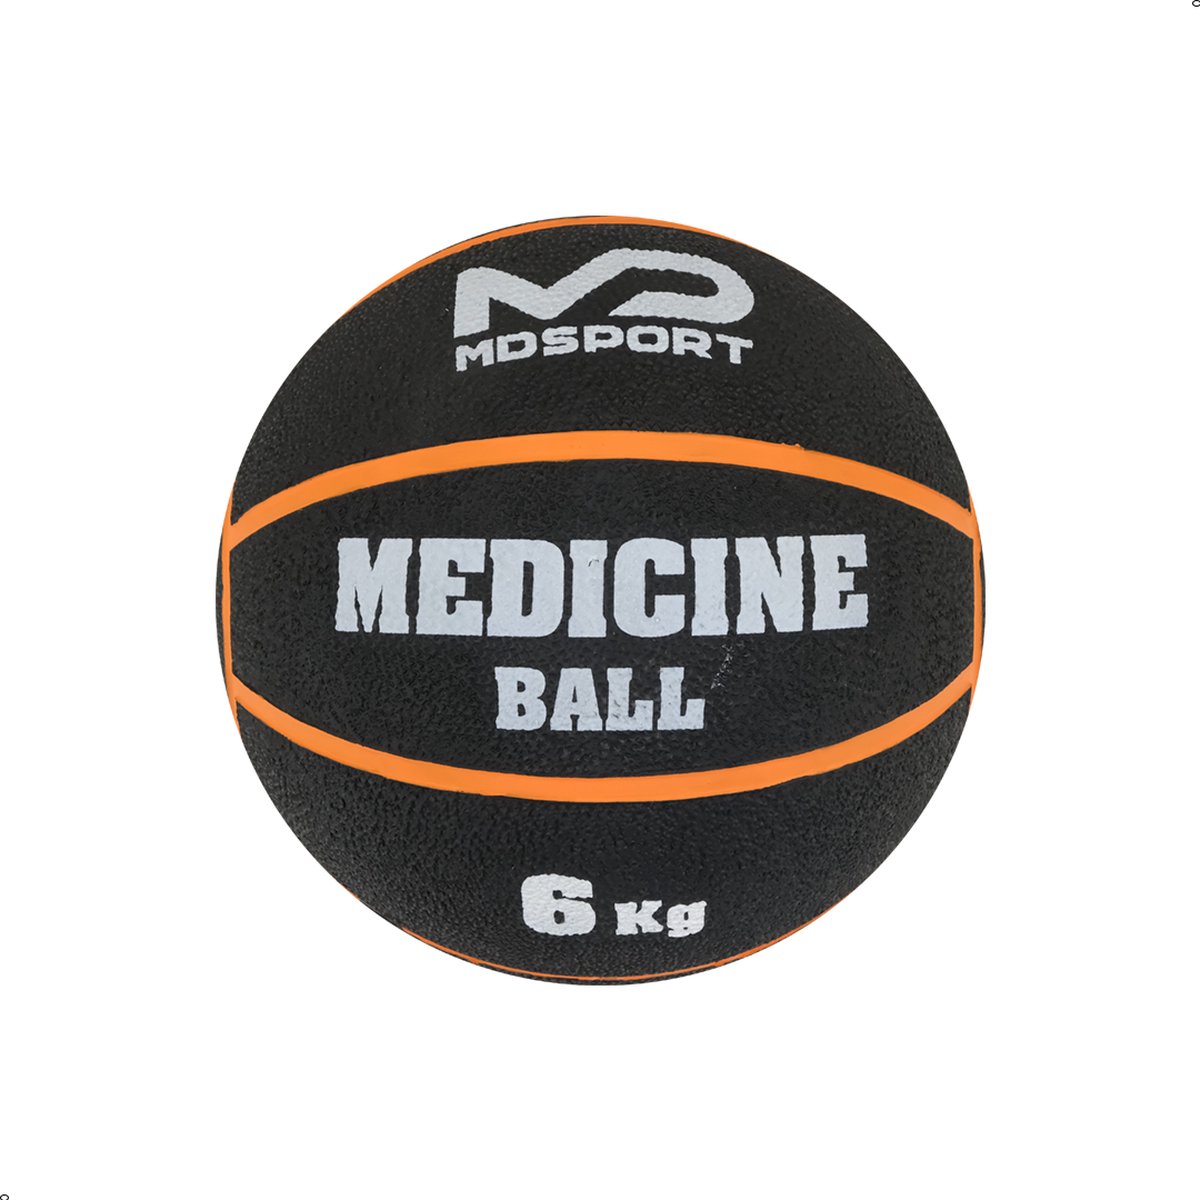 Medicijnbal 6KG - Medicinebal 6KG - Rubber - Top kwaliteit - Zwart/Oranje